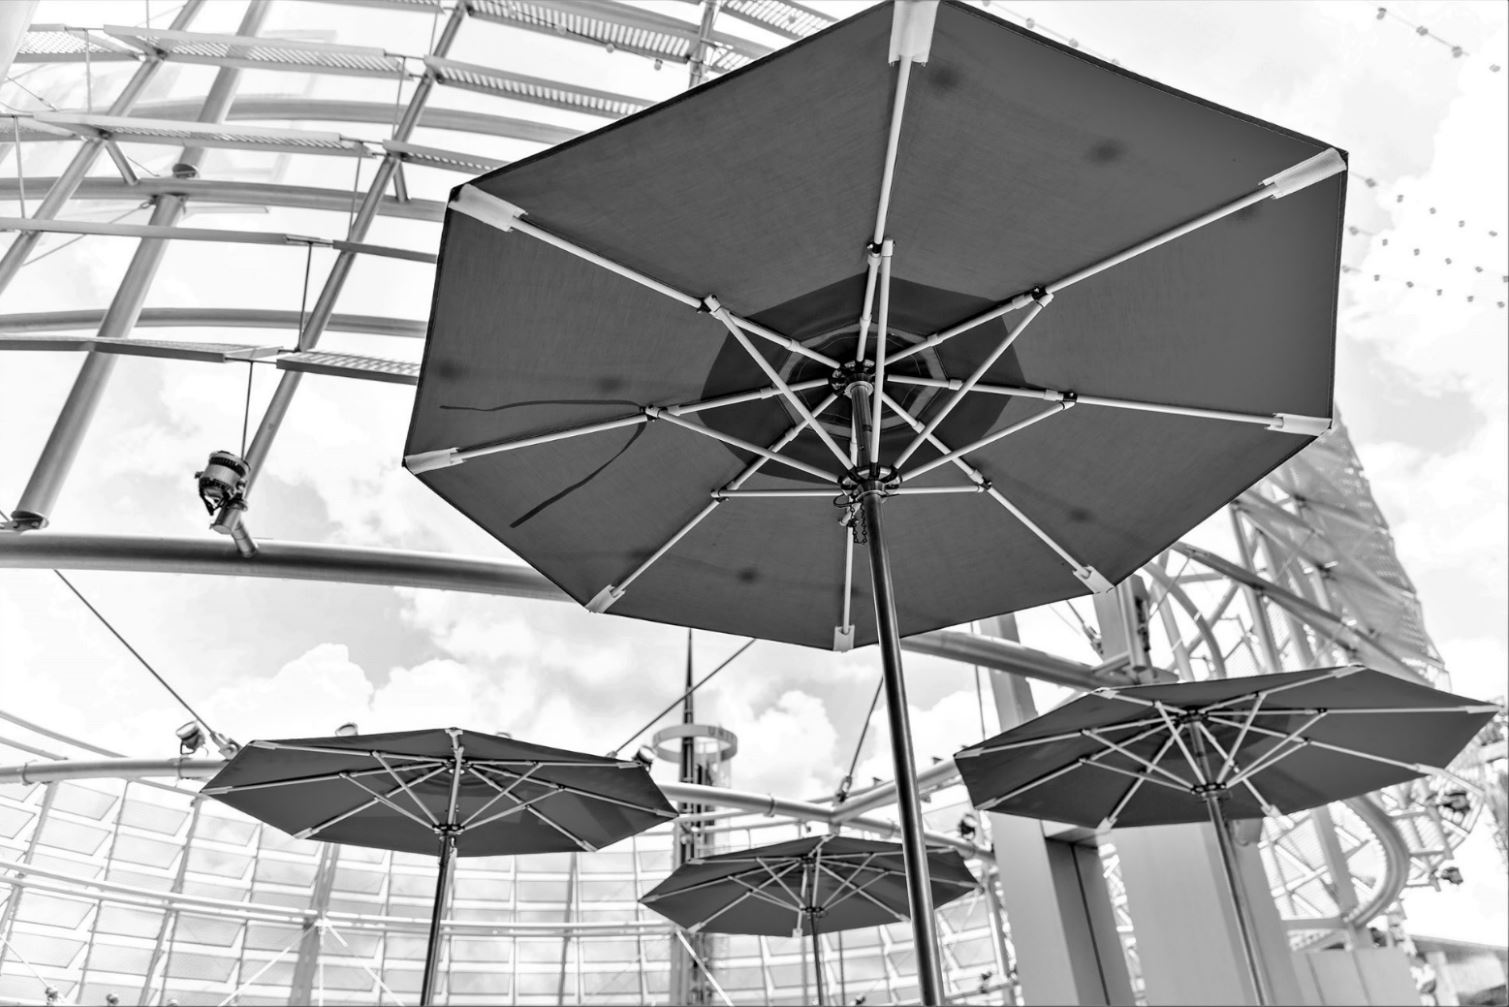 Tenten, vloeren &amp; parasols verhuur Zuid Limburg - Deguelle Party ...